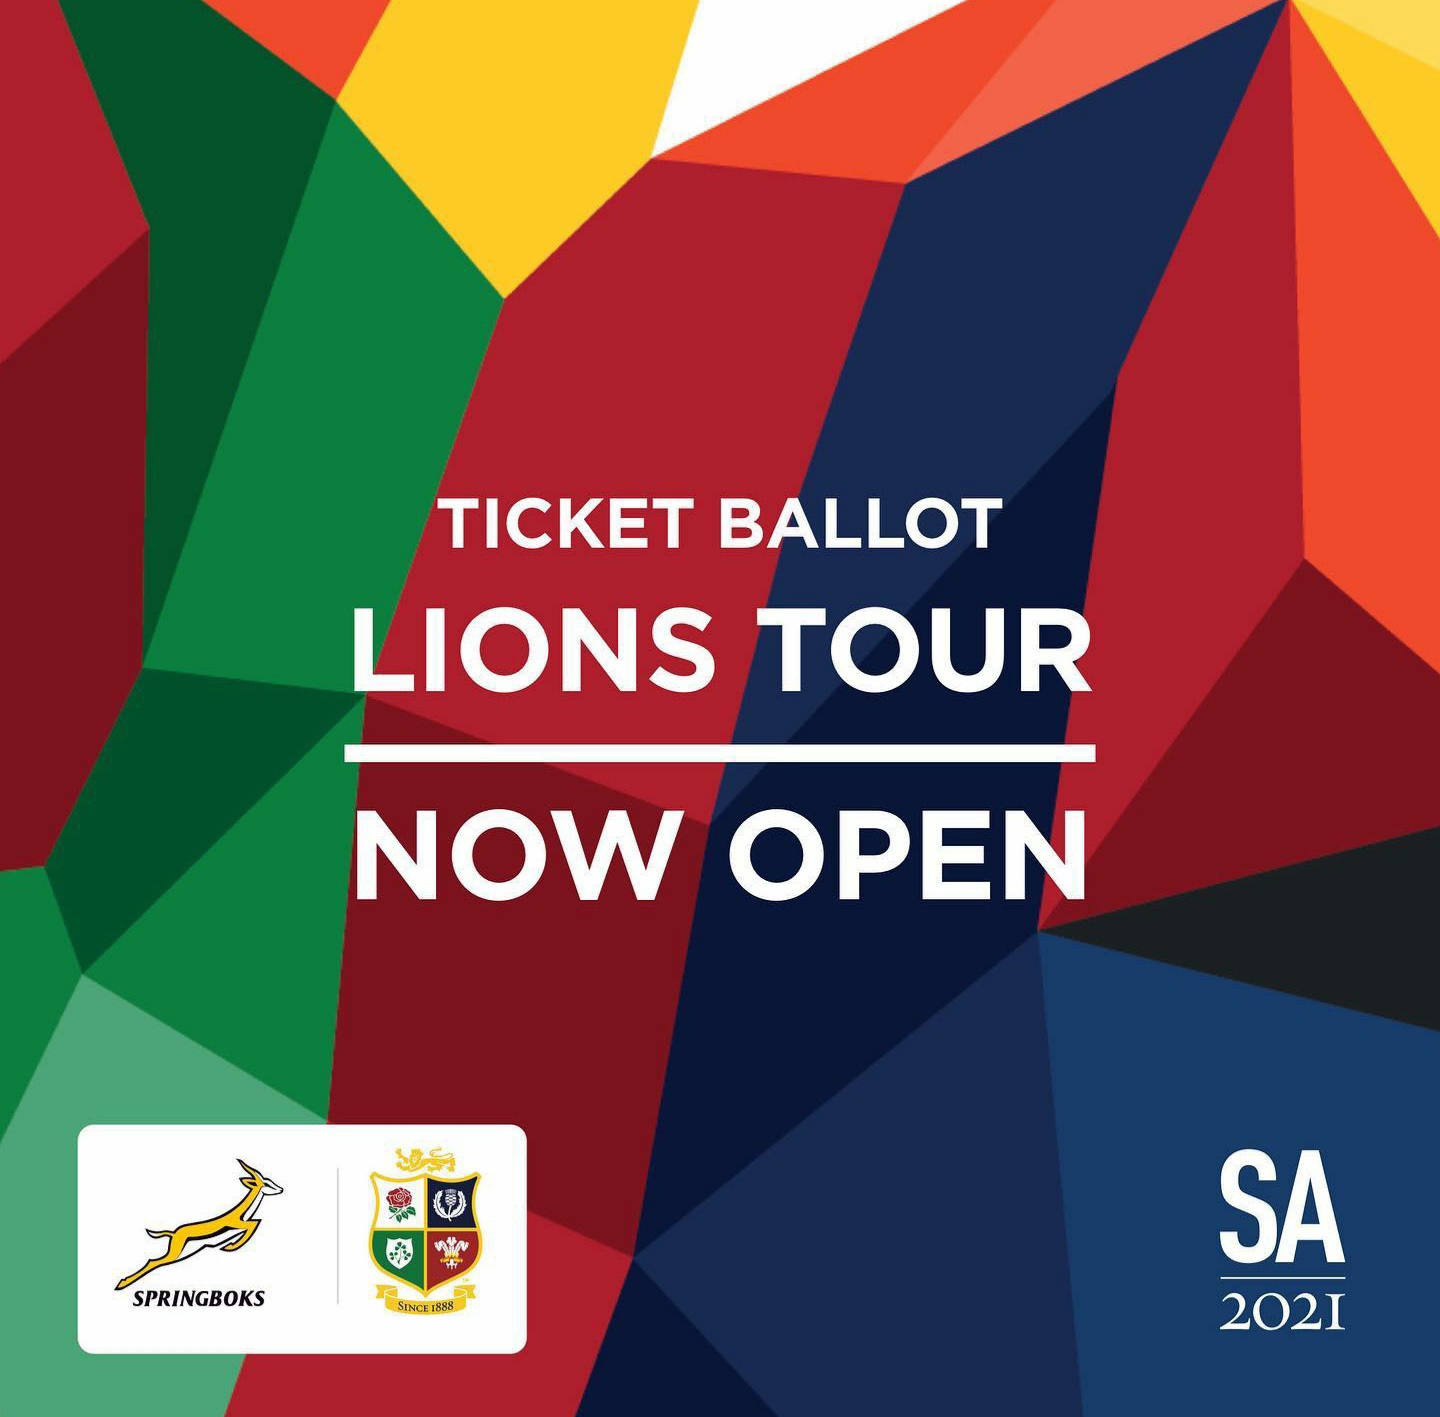 British & Irish Lions Tour to SA 2021: Ticket ballot goes Live, but SA residents have time